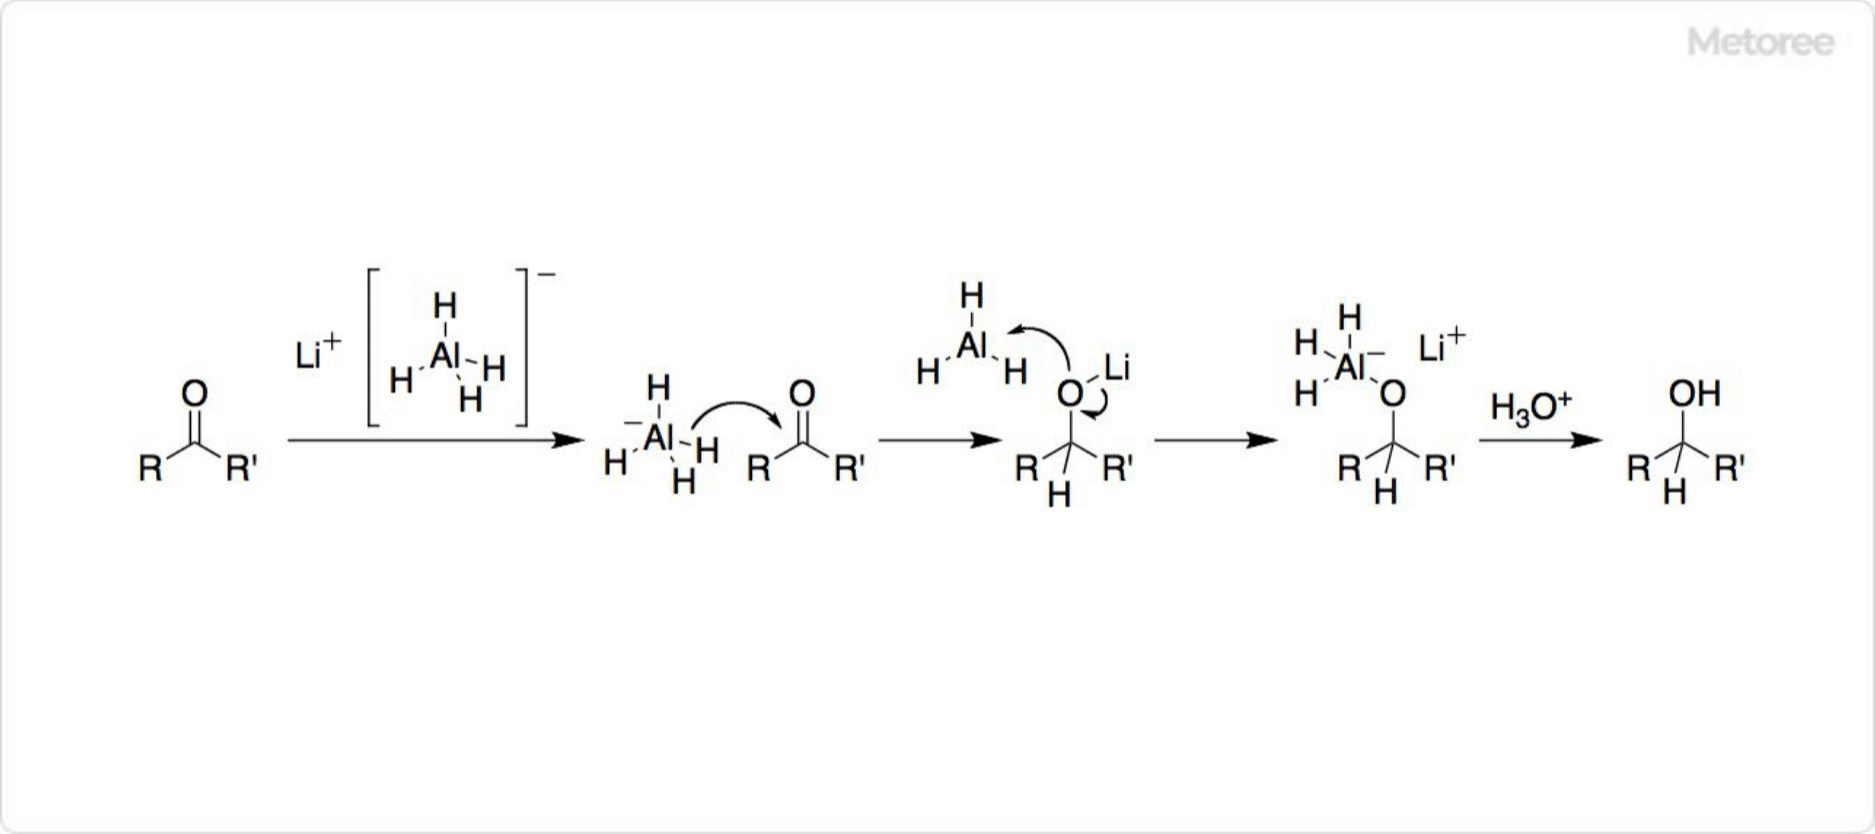 Reaction Mechanism of Lithium Aluminum Hydride